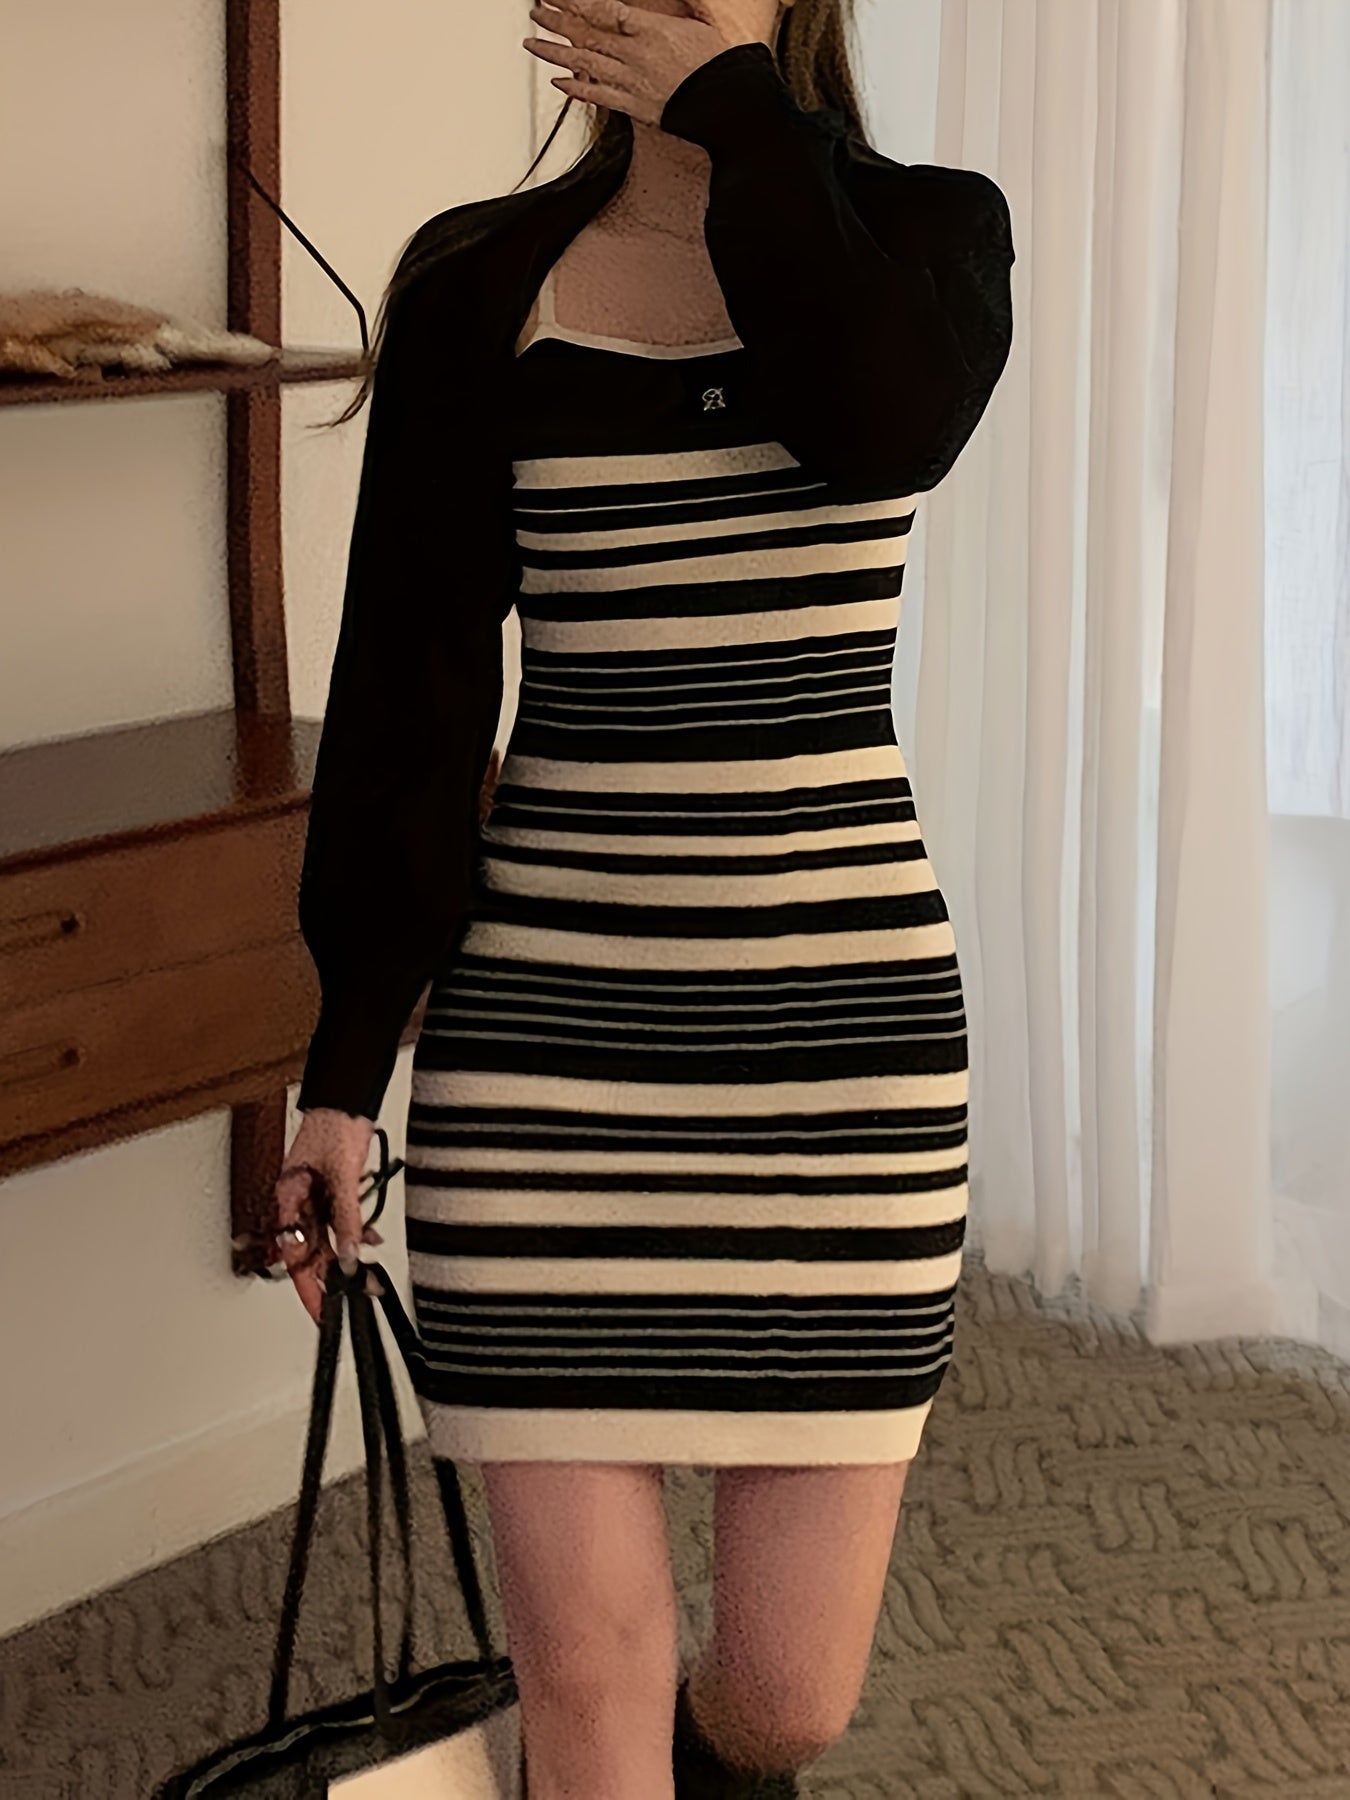 Antmvs Striped Spaghetti Strap Dress, Casual Sleeveless Bodycon Dress, Women's Clothing